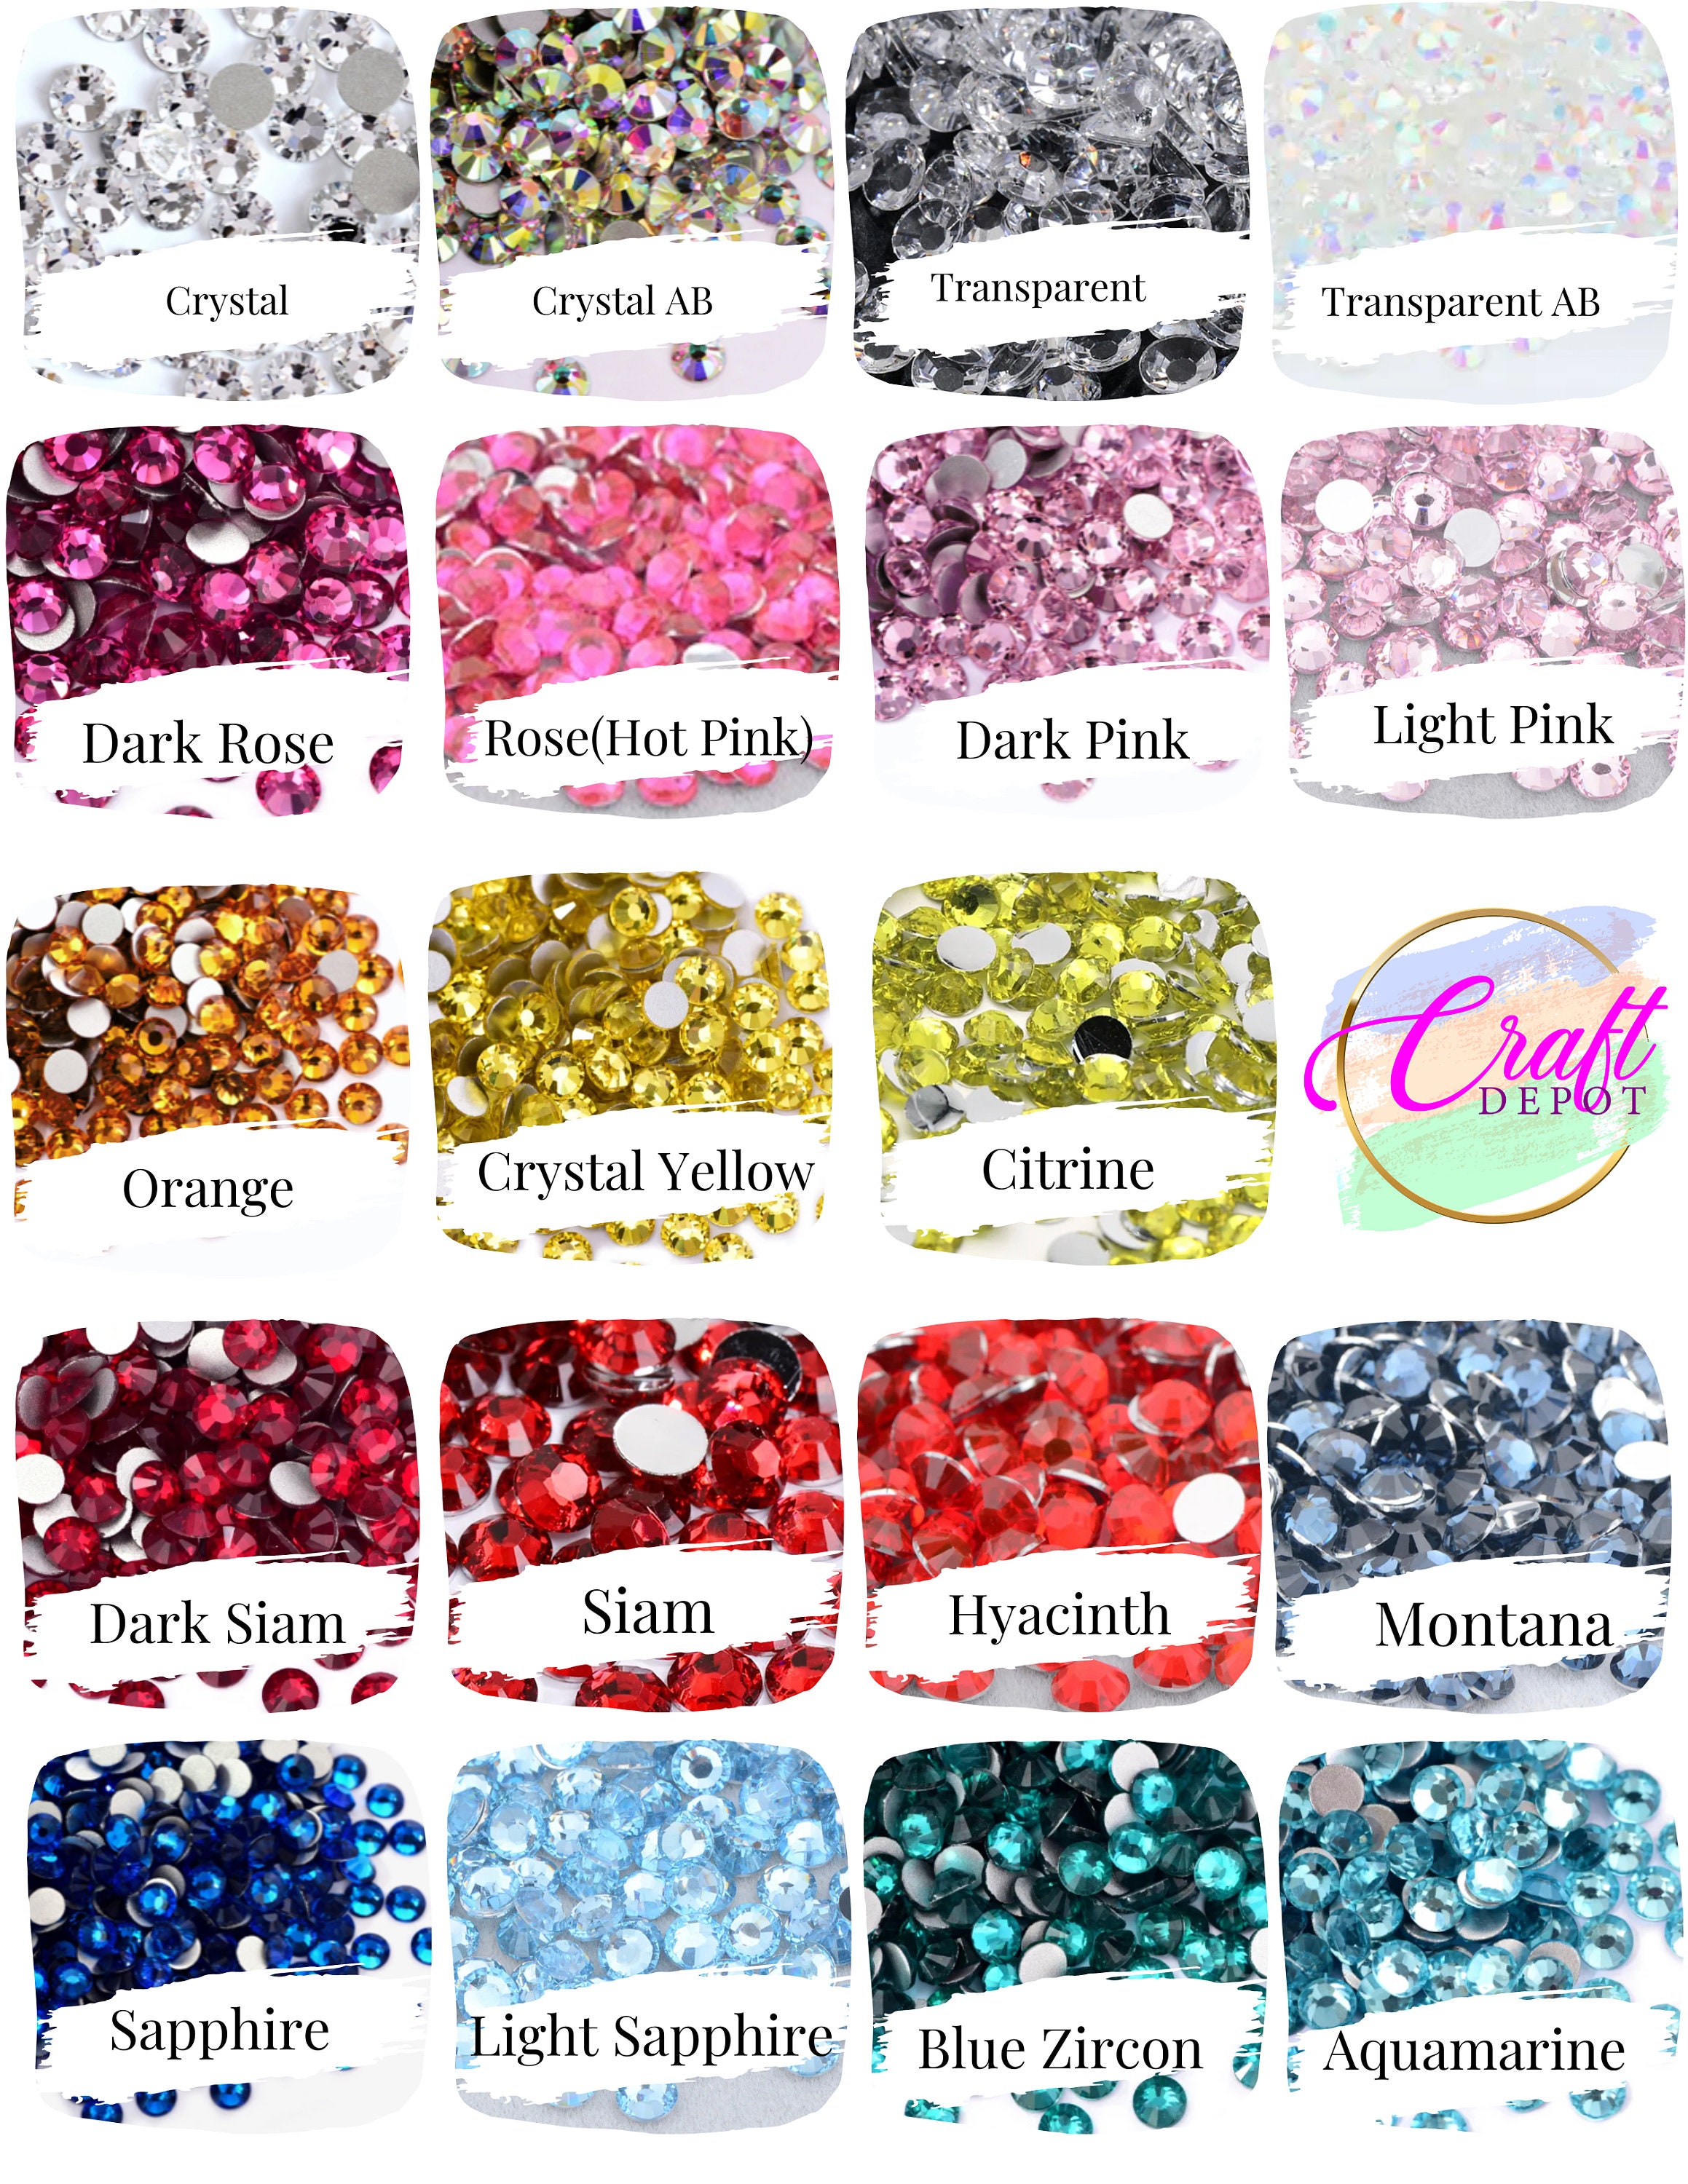 Jollin Hot Fix Crystal Flatback Rhinestones Glass Diamantes Gems 24mm(8ss 2880pcs, Light Purple AB)